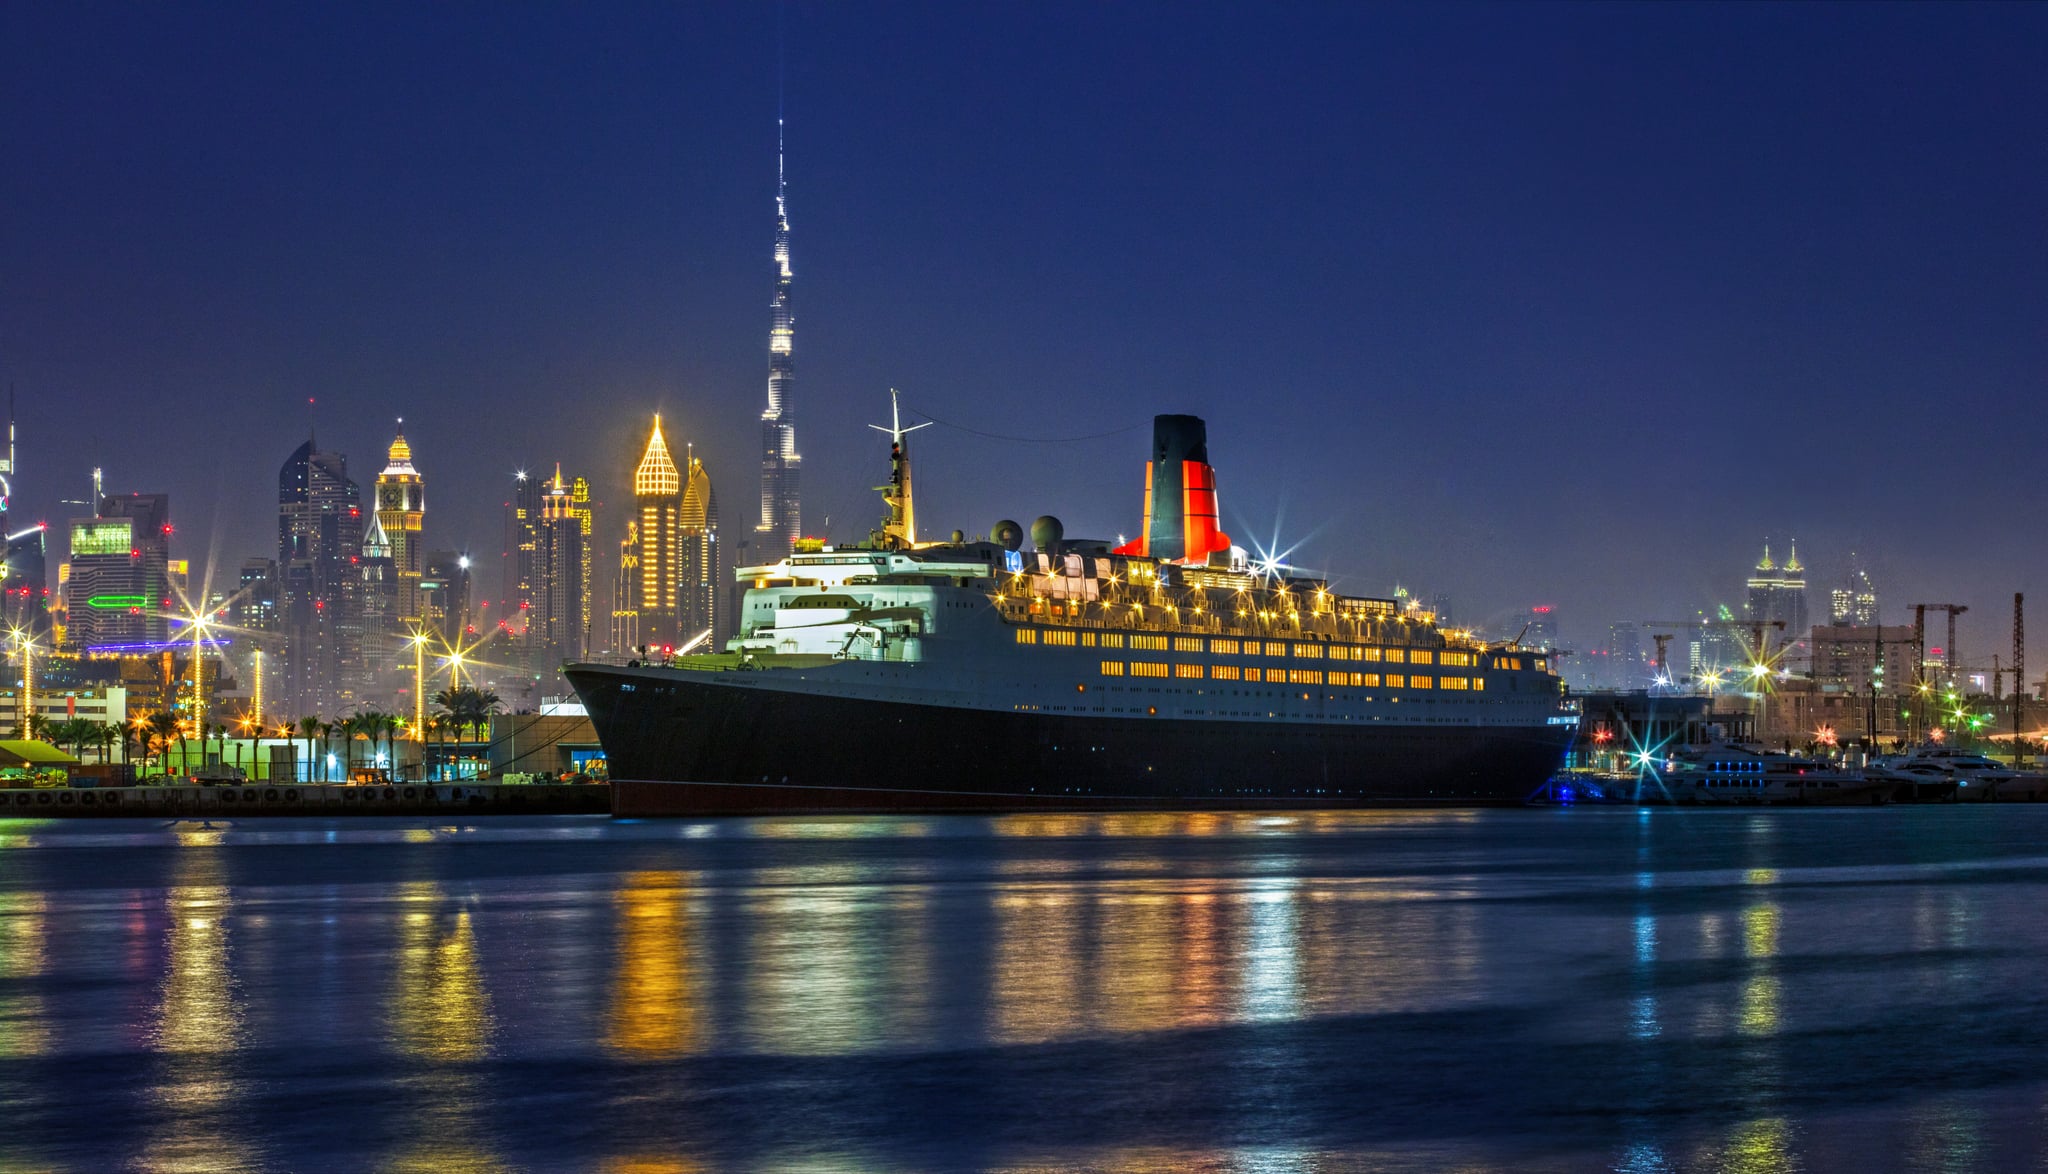 Queen Elizabeth II Cruise Ship Dubai Pictures | POPSUGAR ...